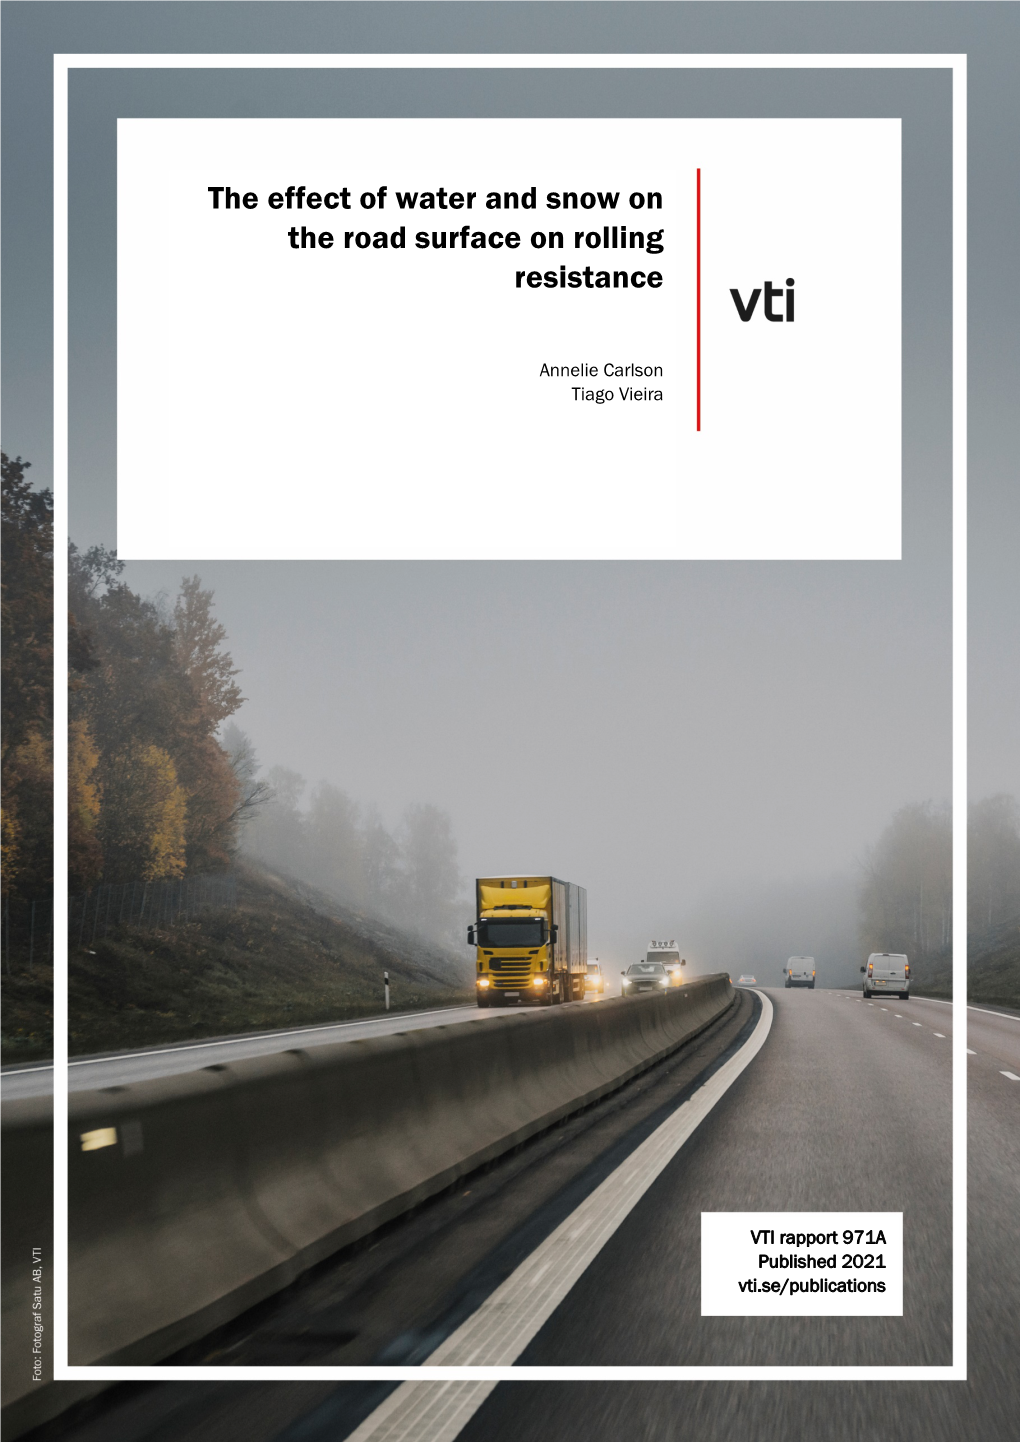 VTI Rapport 971A Published 2021 Vti.Se/Publications